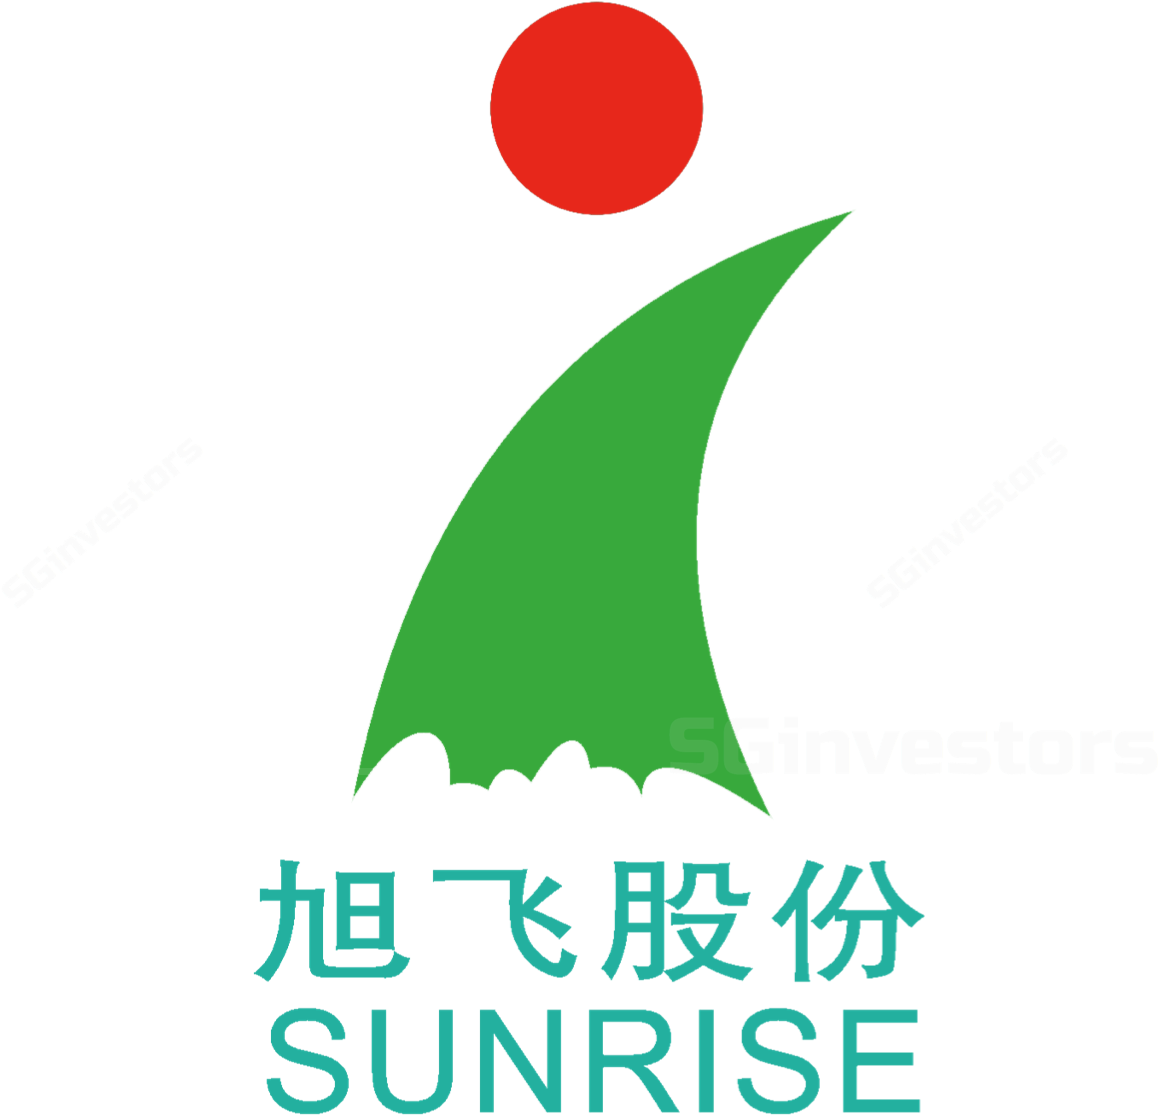 Sunrise Shares Holdings Ltd - Cosco (1200x1200)